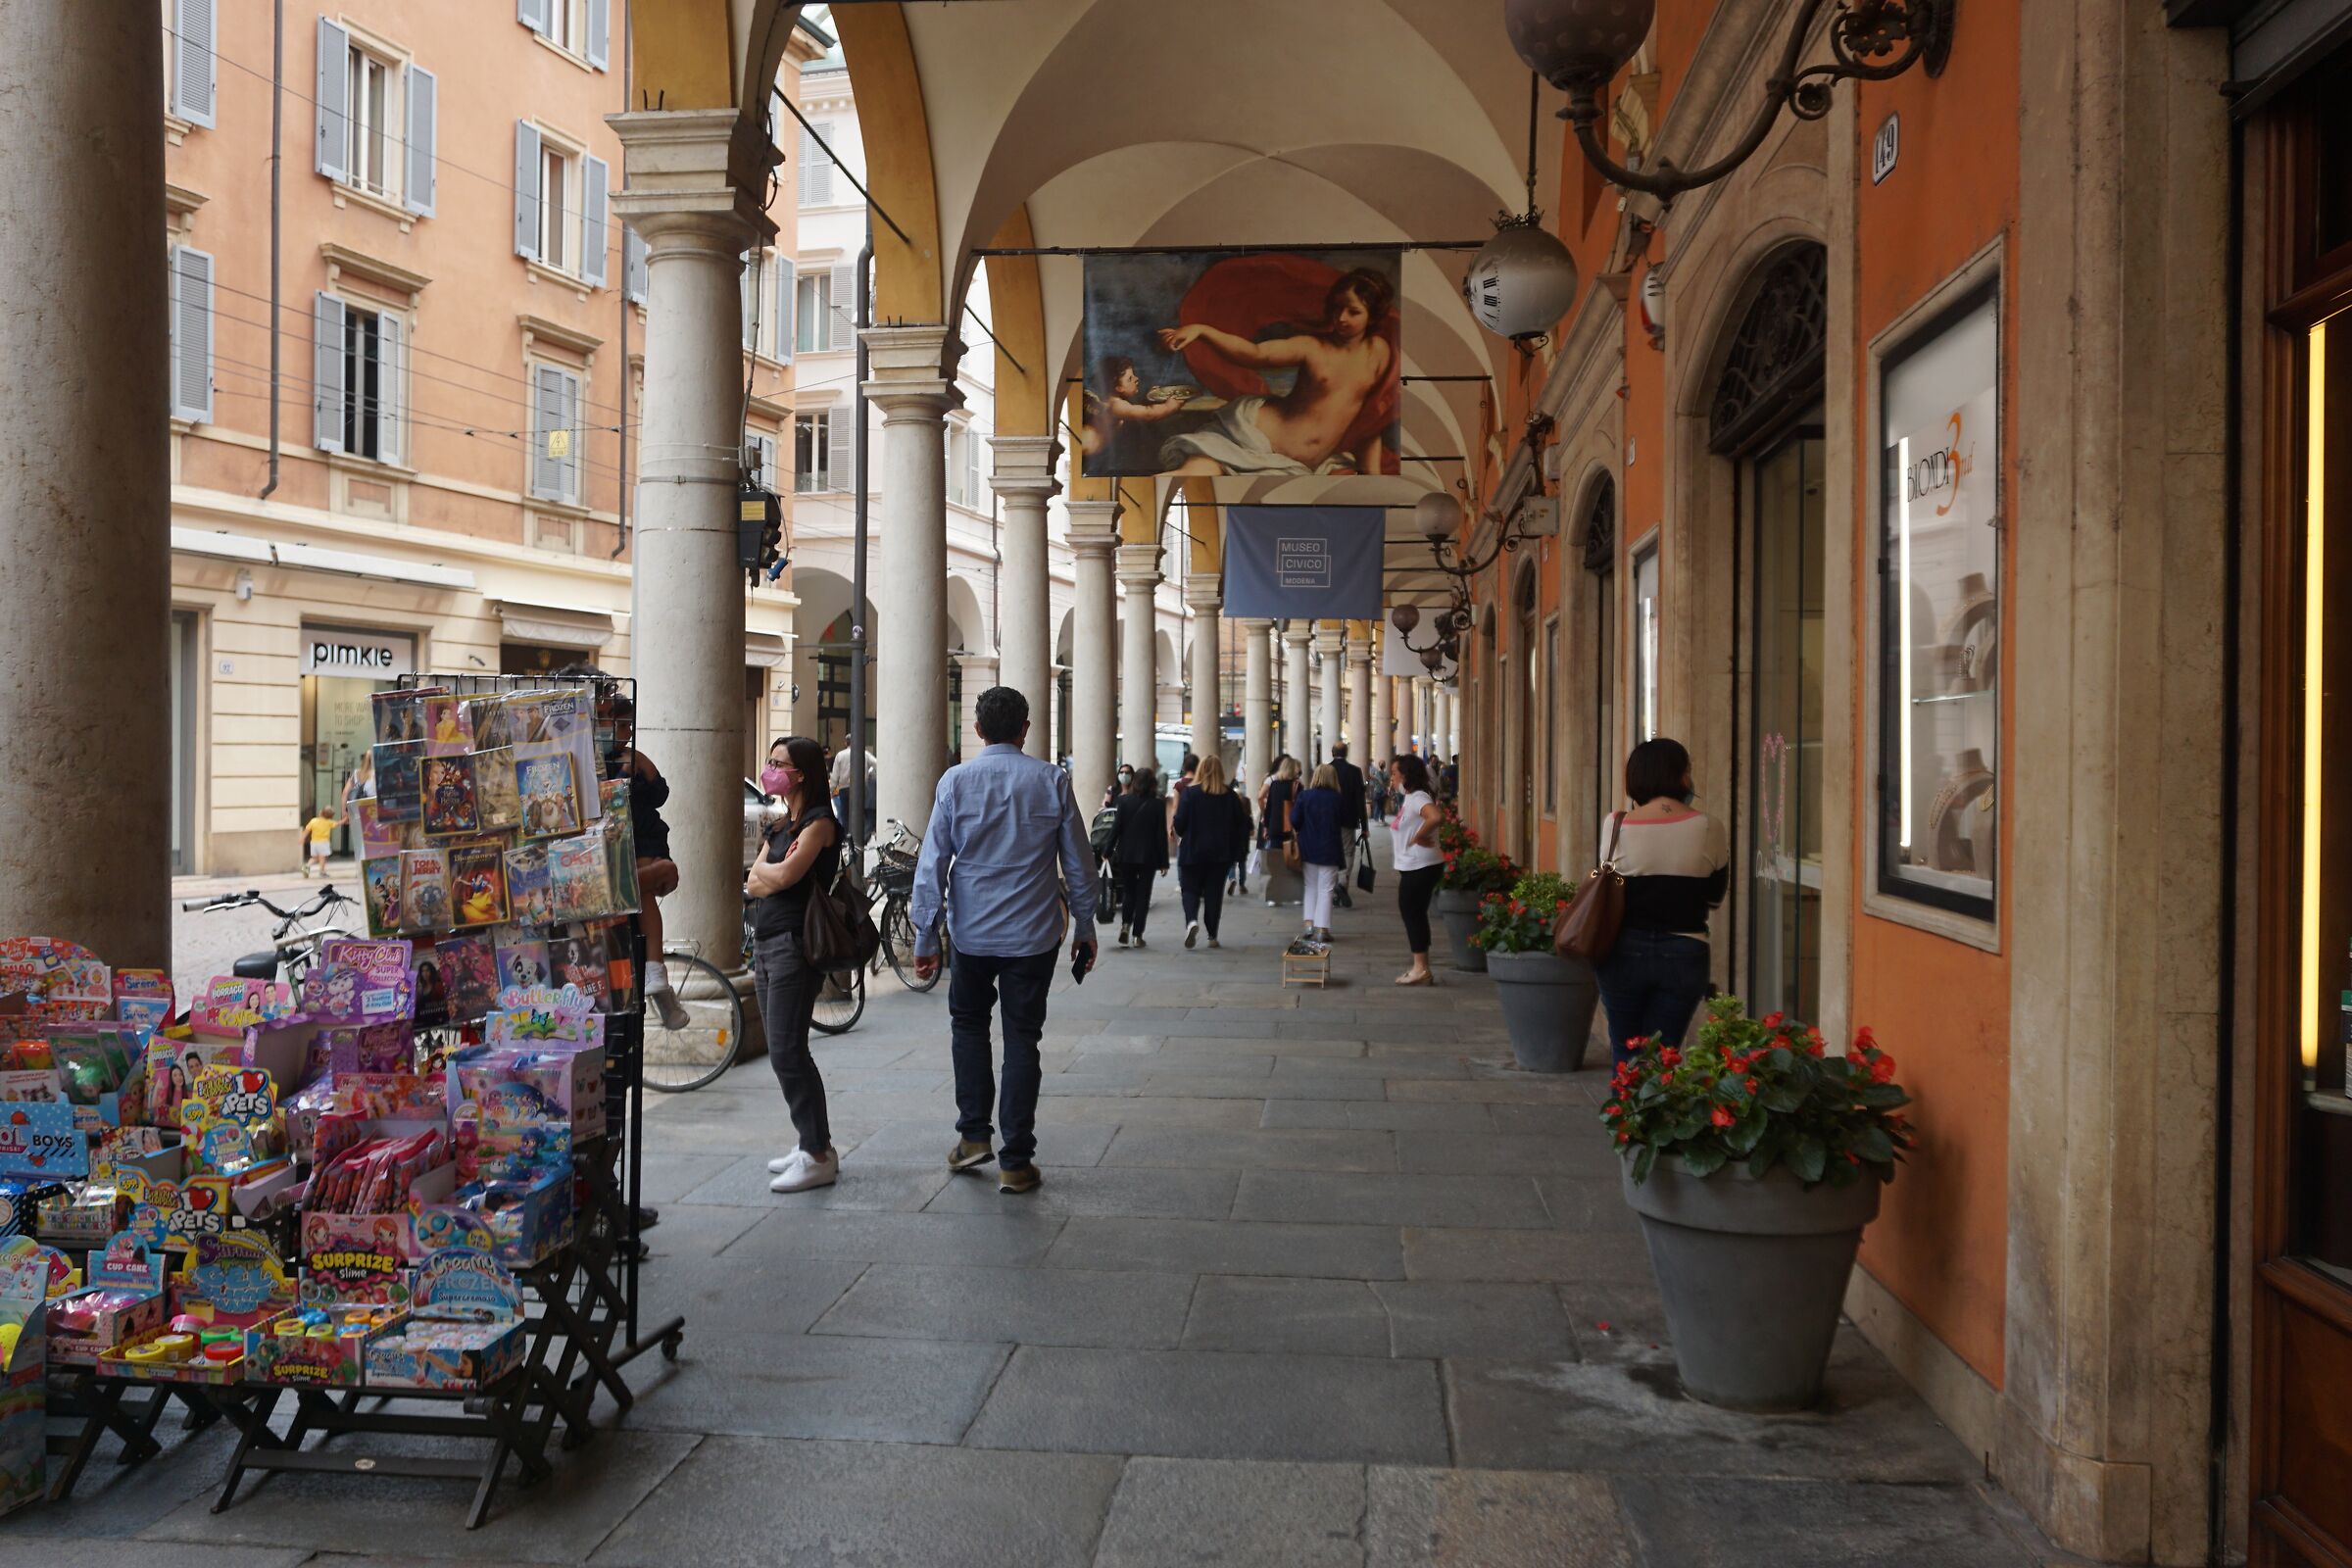 The arcades of Via Emilia...